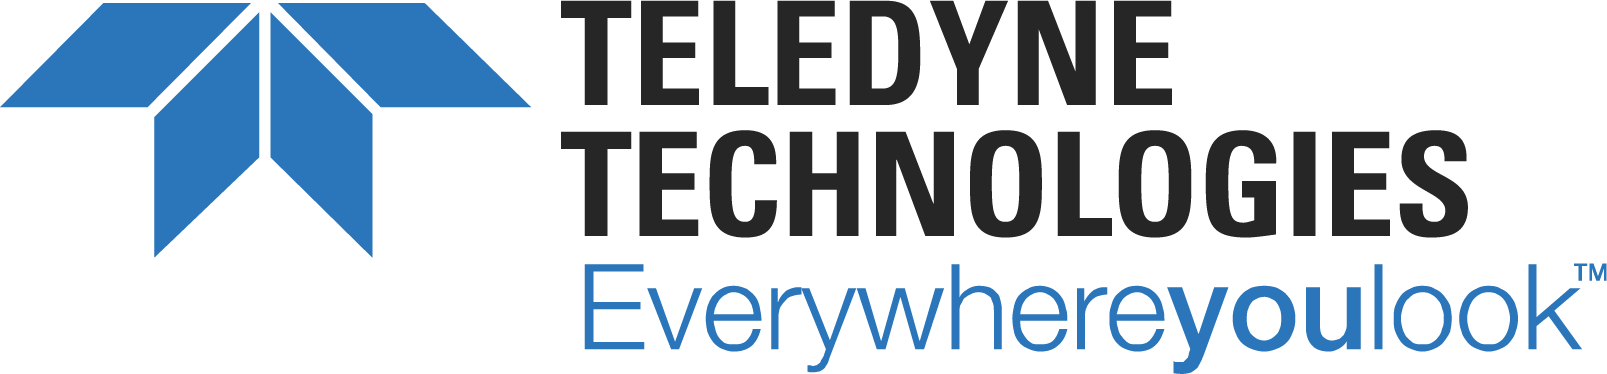 Teledyne Technologies Logo png